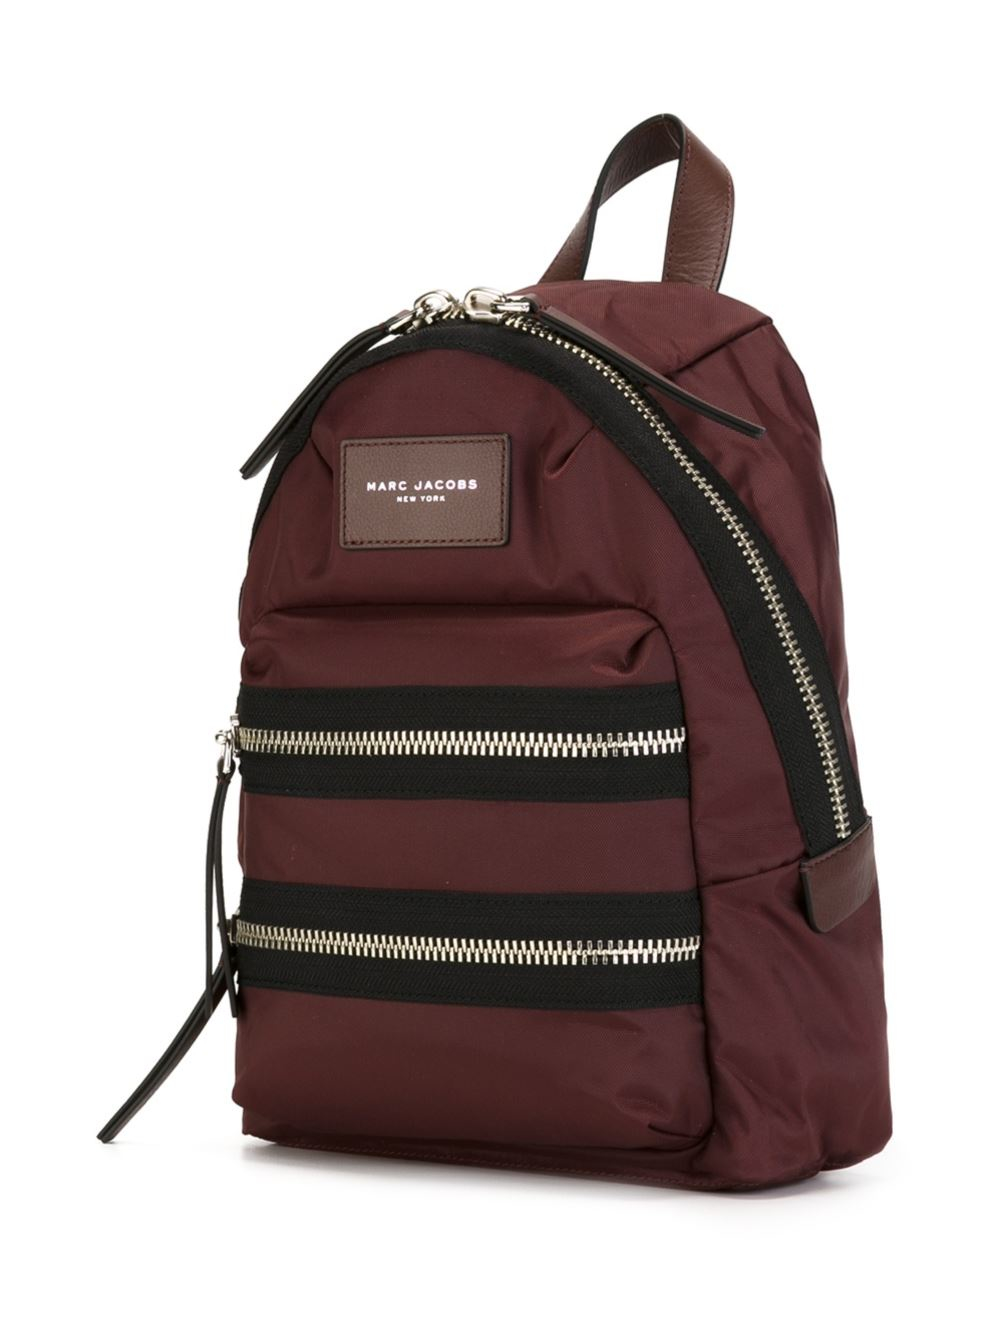 Marc Jacobs Biker Mini Backpack in Brown for Men - Lyst